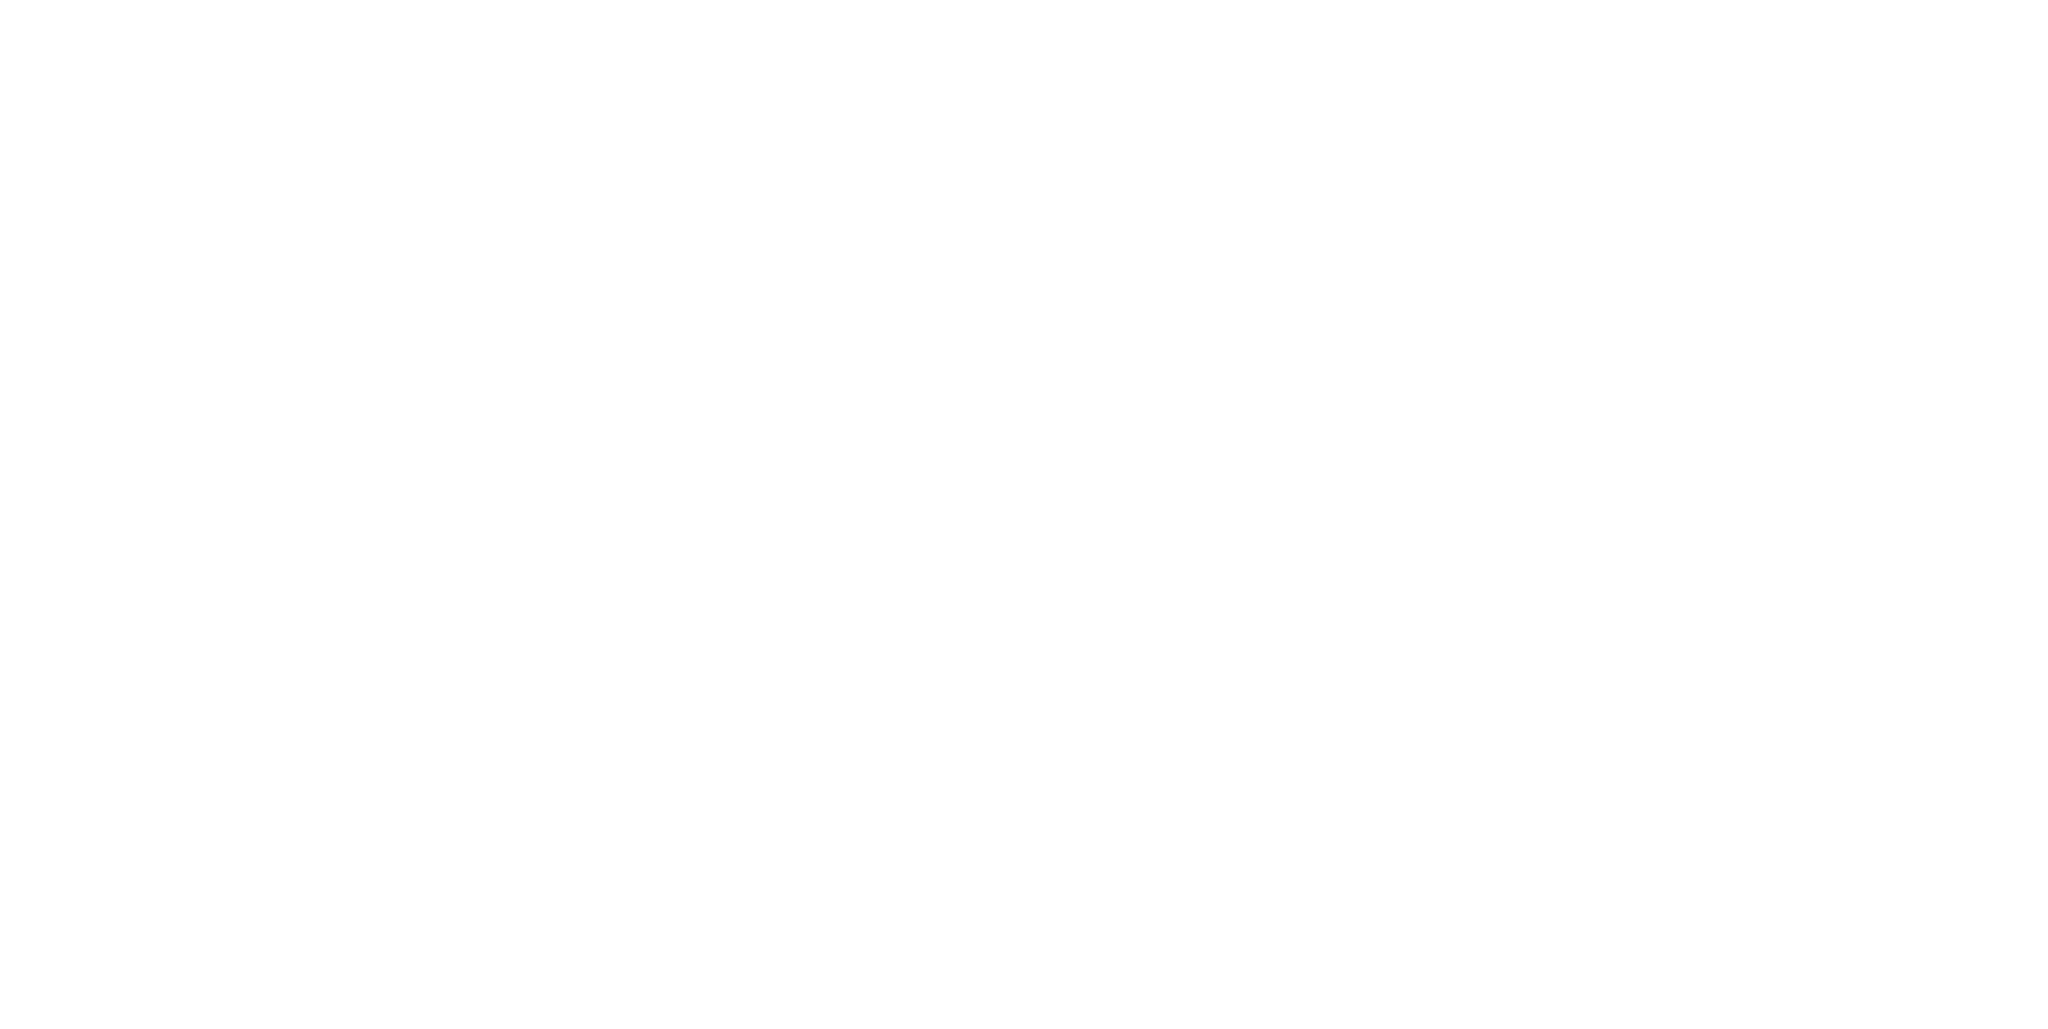 Shoof digital logo